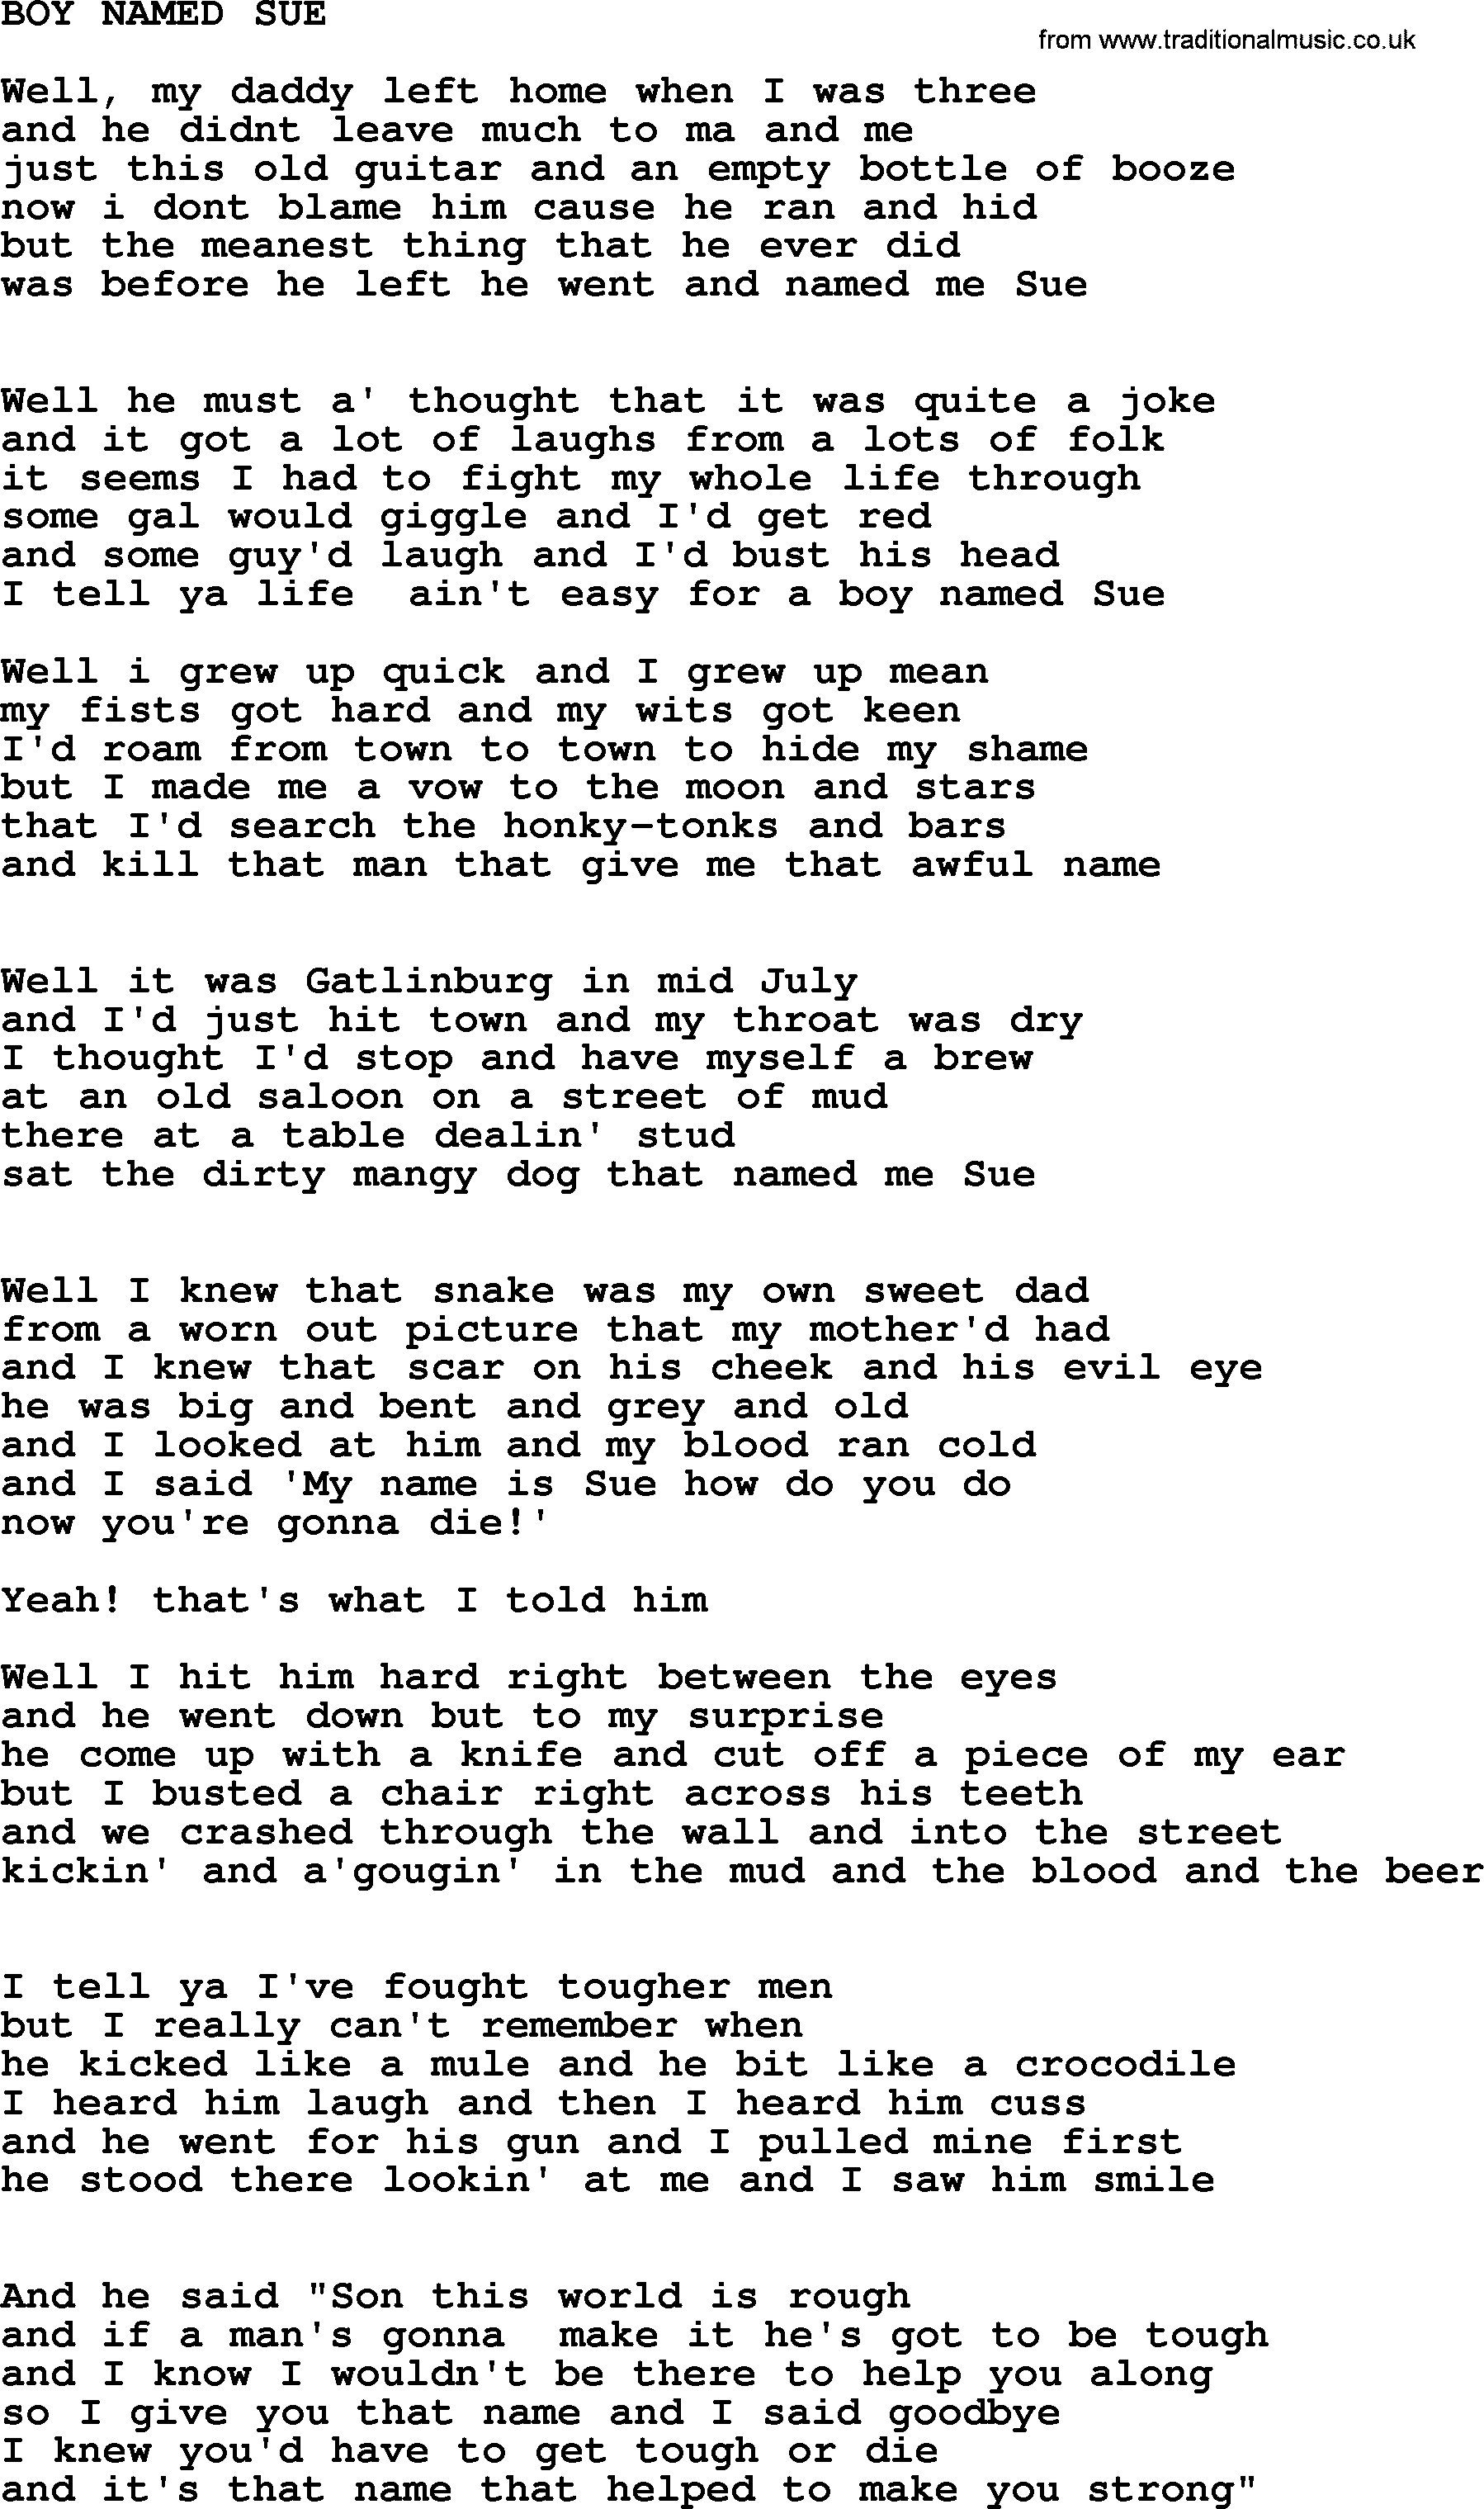 Johnny Cash song Boy Named Sue.txt lyrics